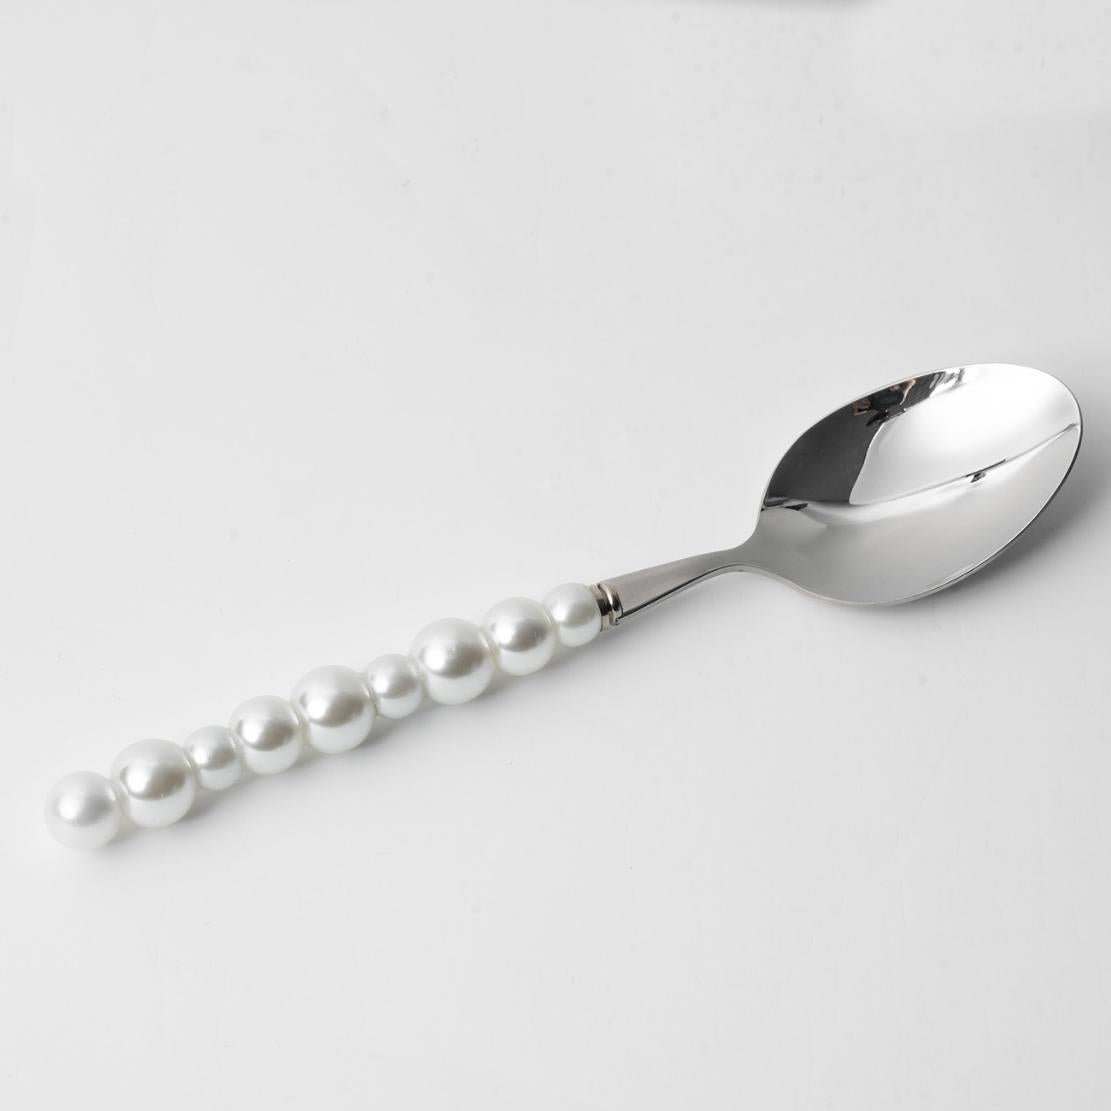 White pearl silver tableware spoon